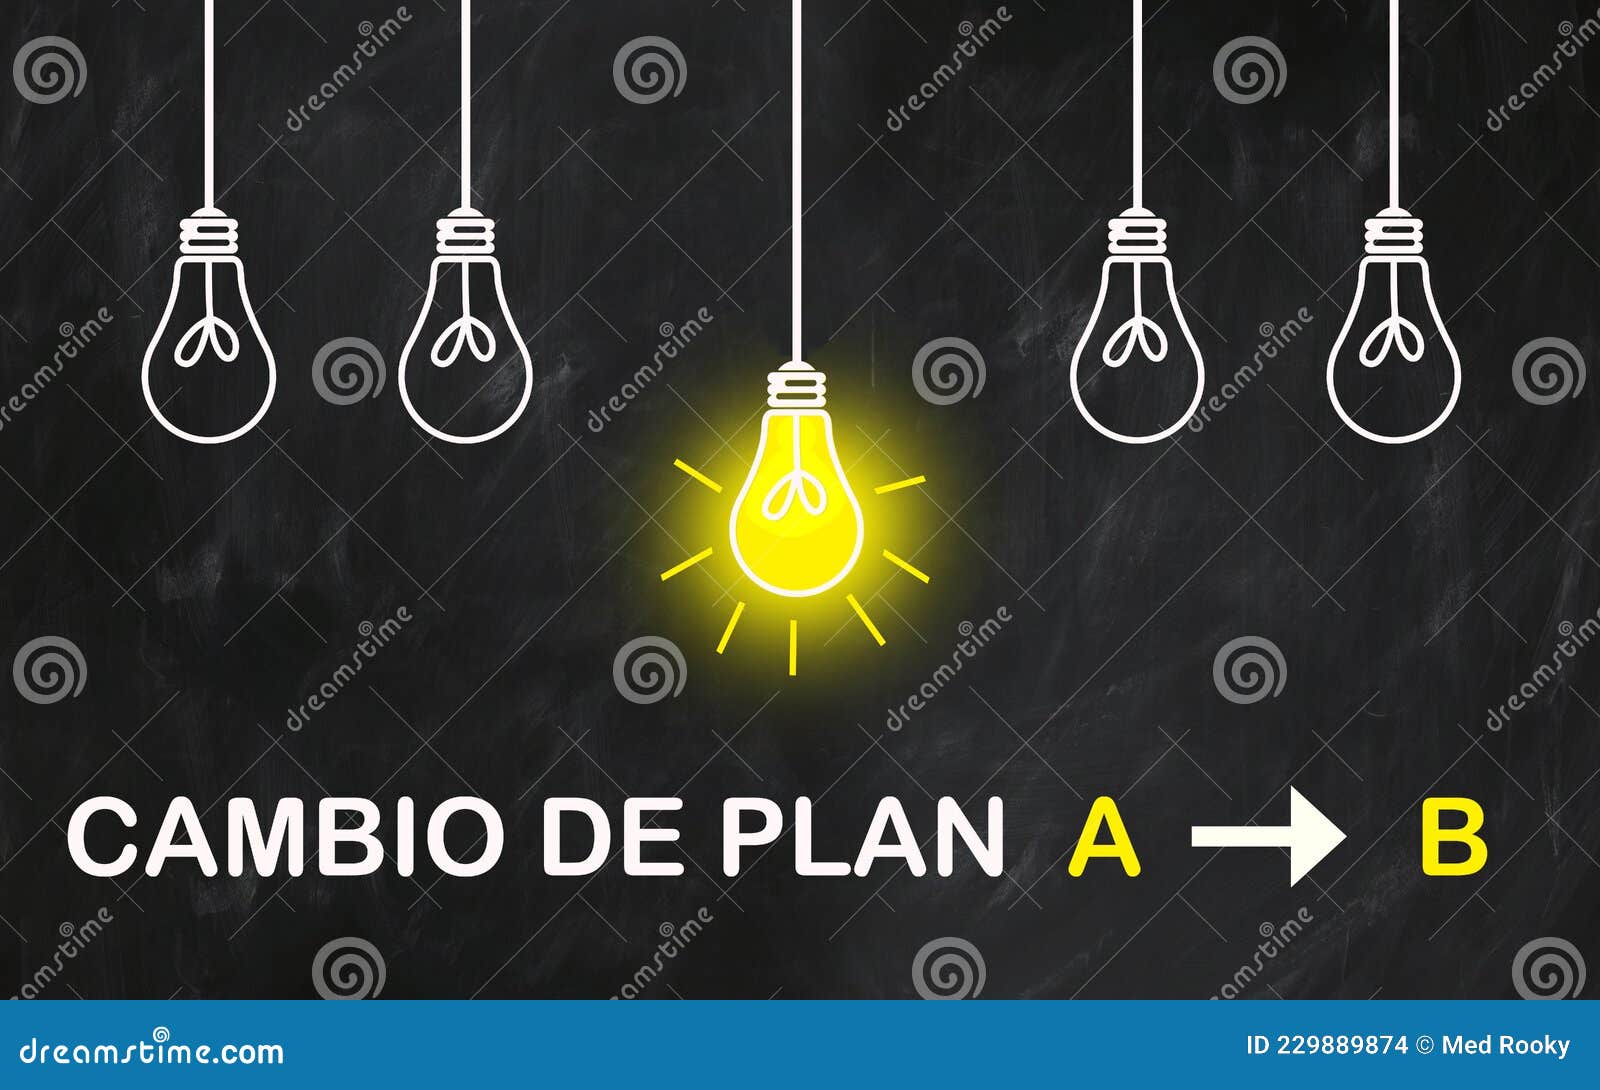 cambio de plan a b, spanish text with light bulbs on blackboard